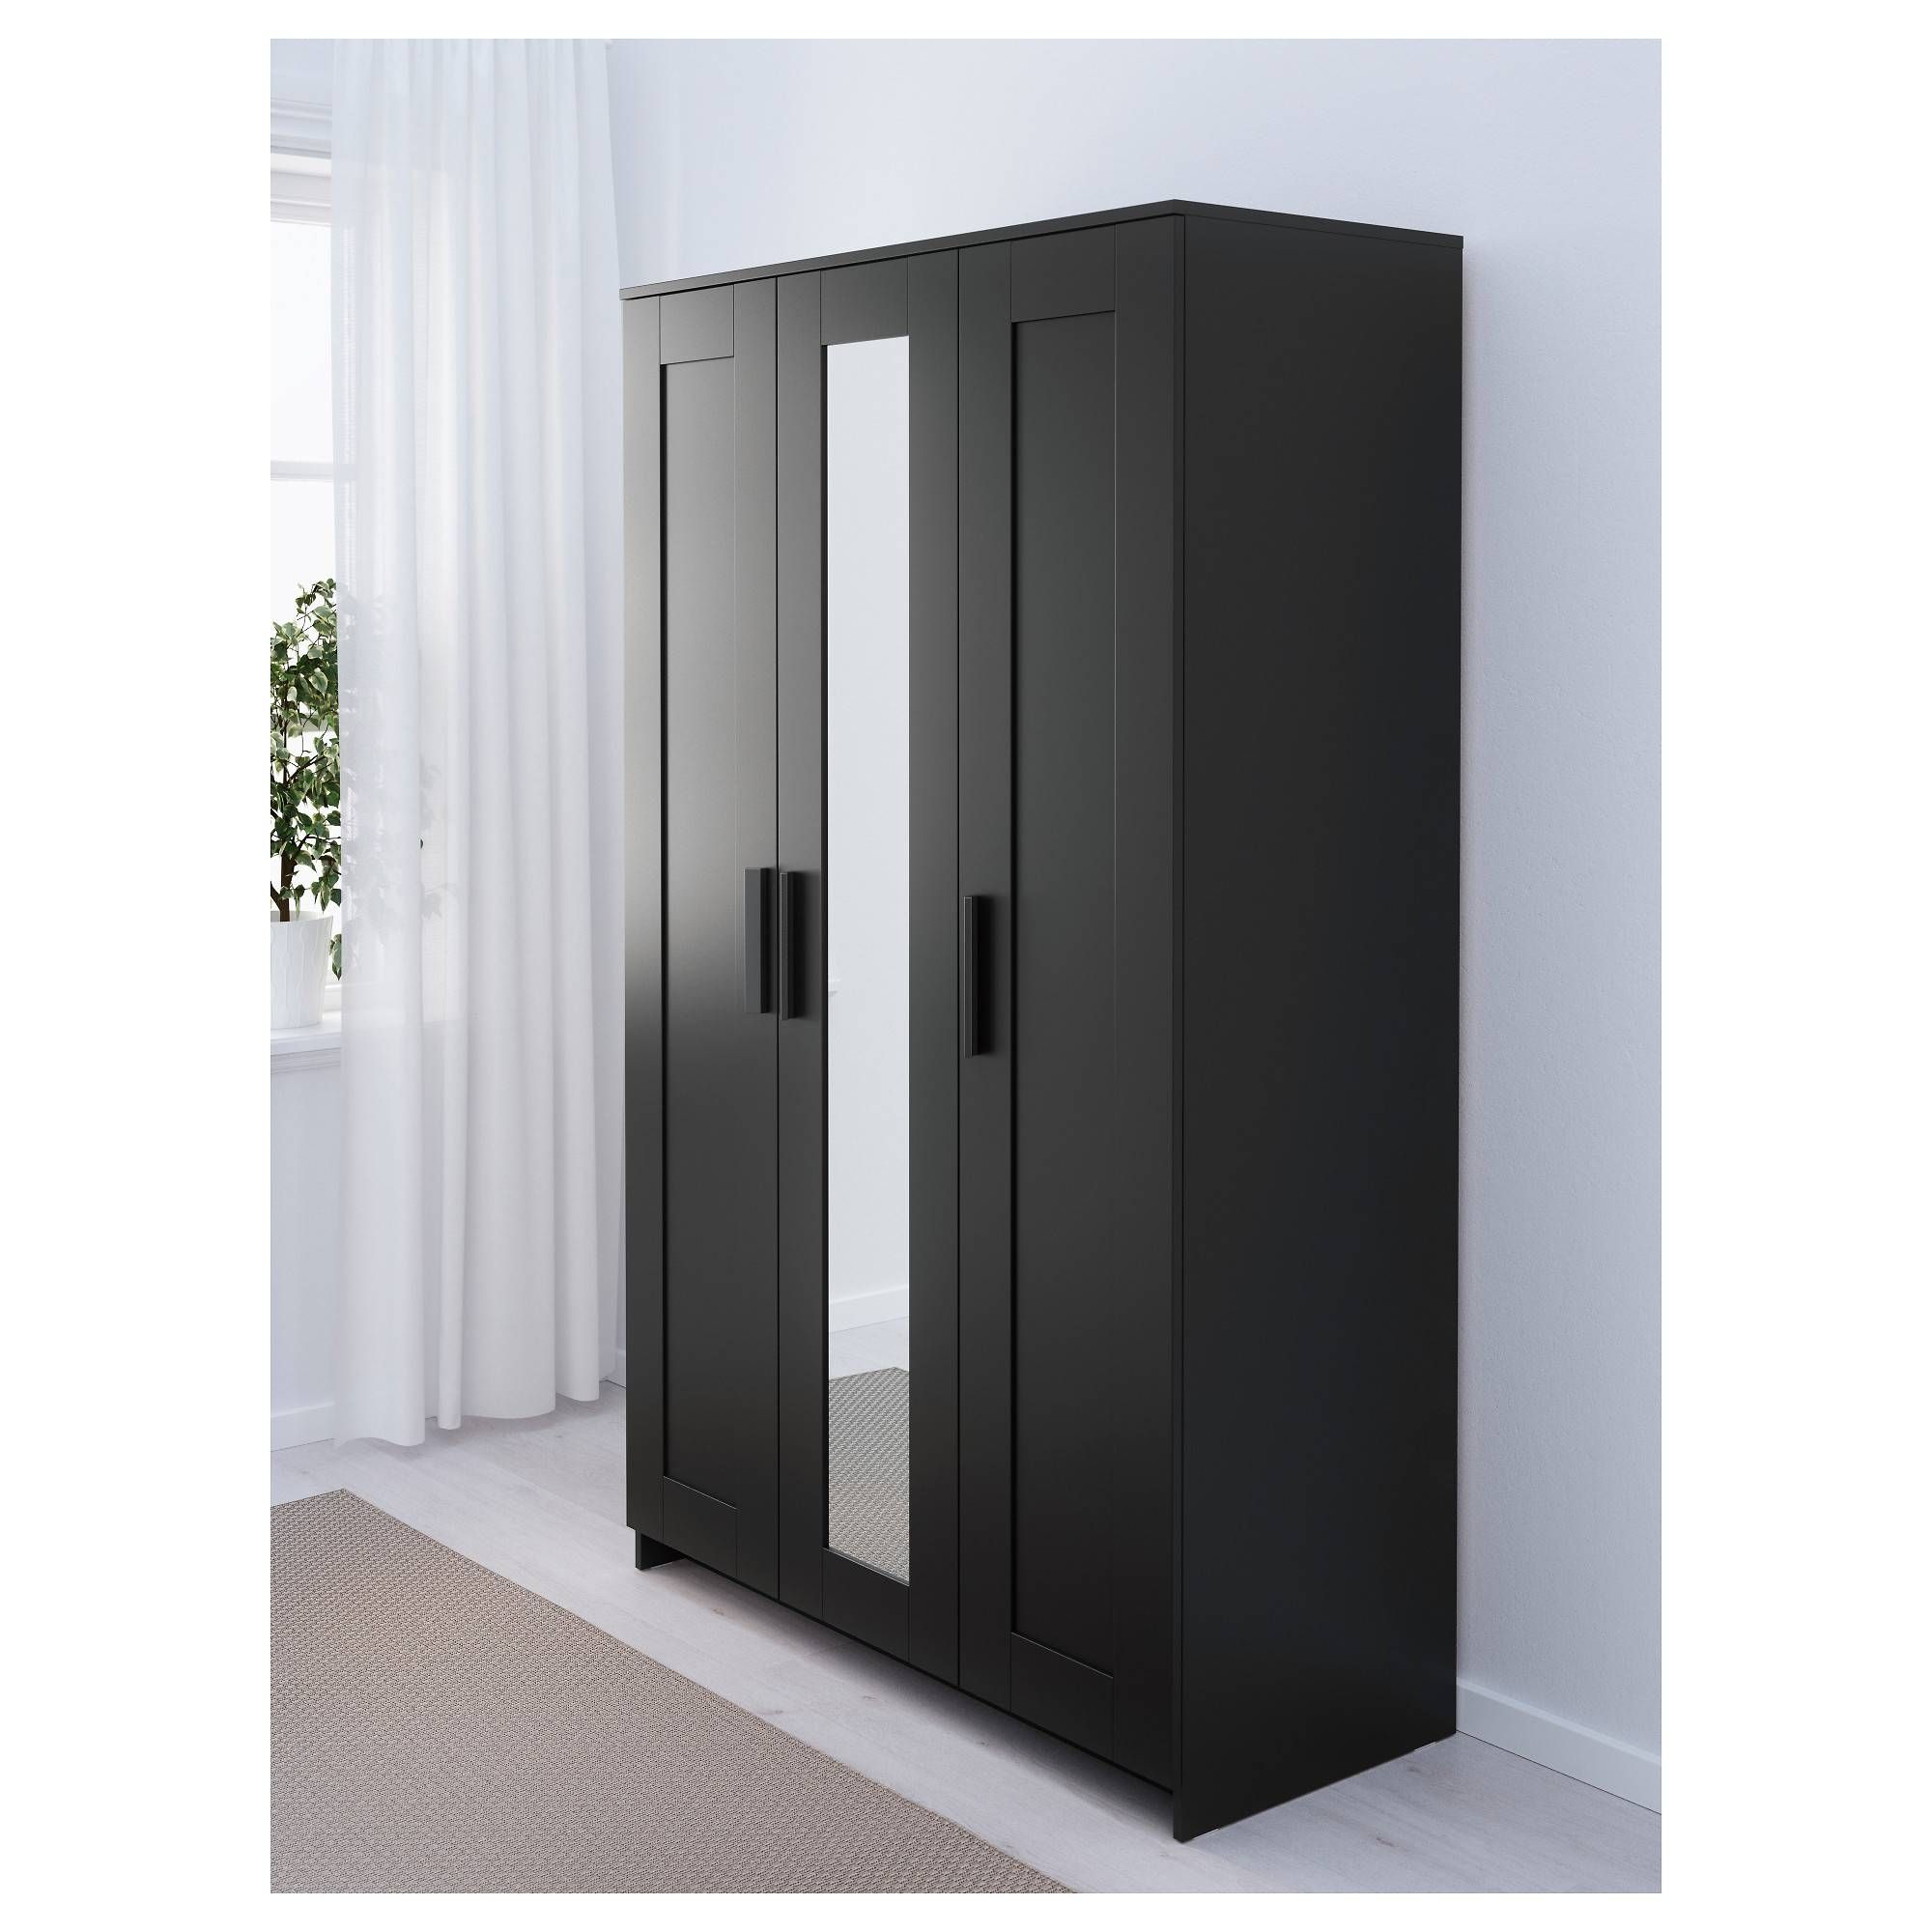 Brimnes Wardrobe With 3 Doors – Black – Ikea Throughout White 3 Door Wardrobes With Mirror (View 5 of 15)